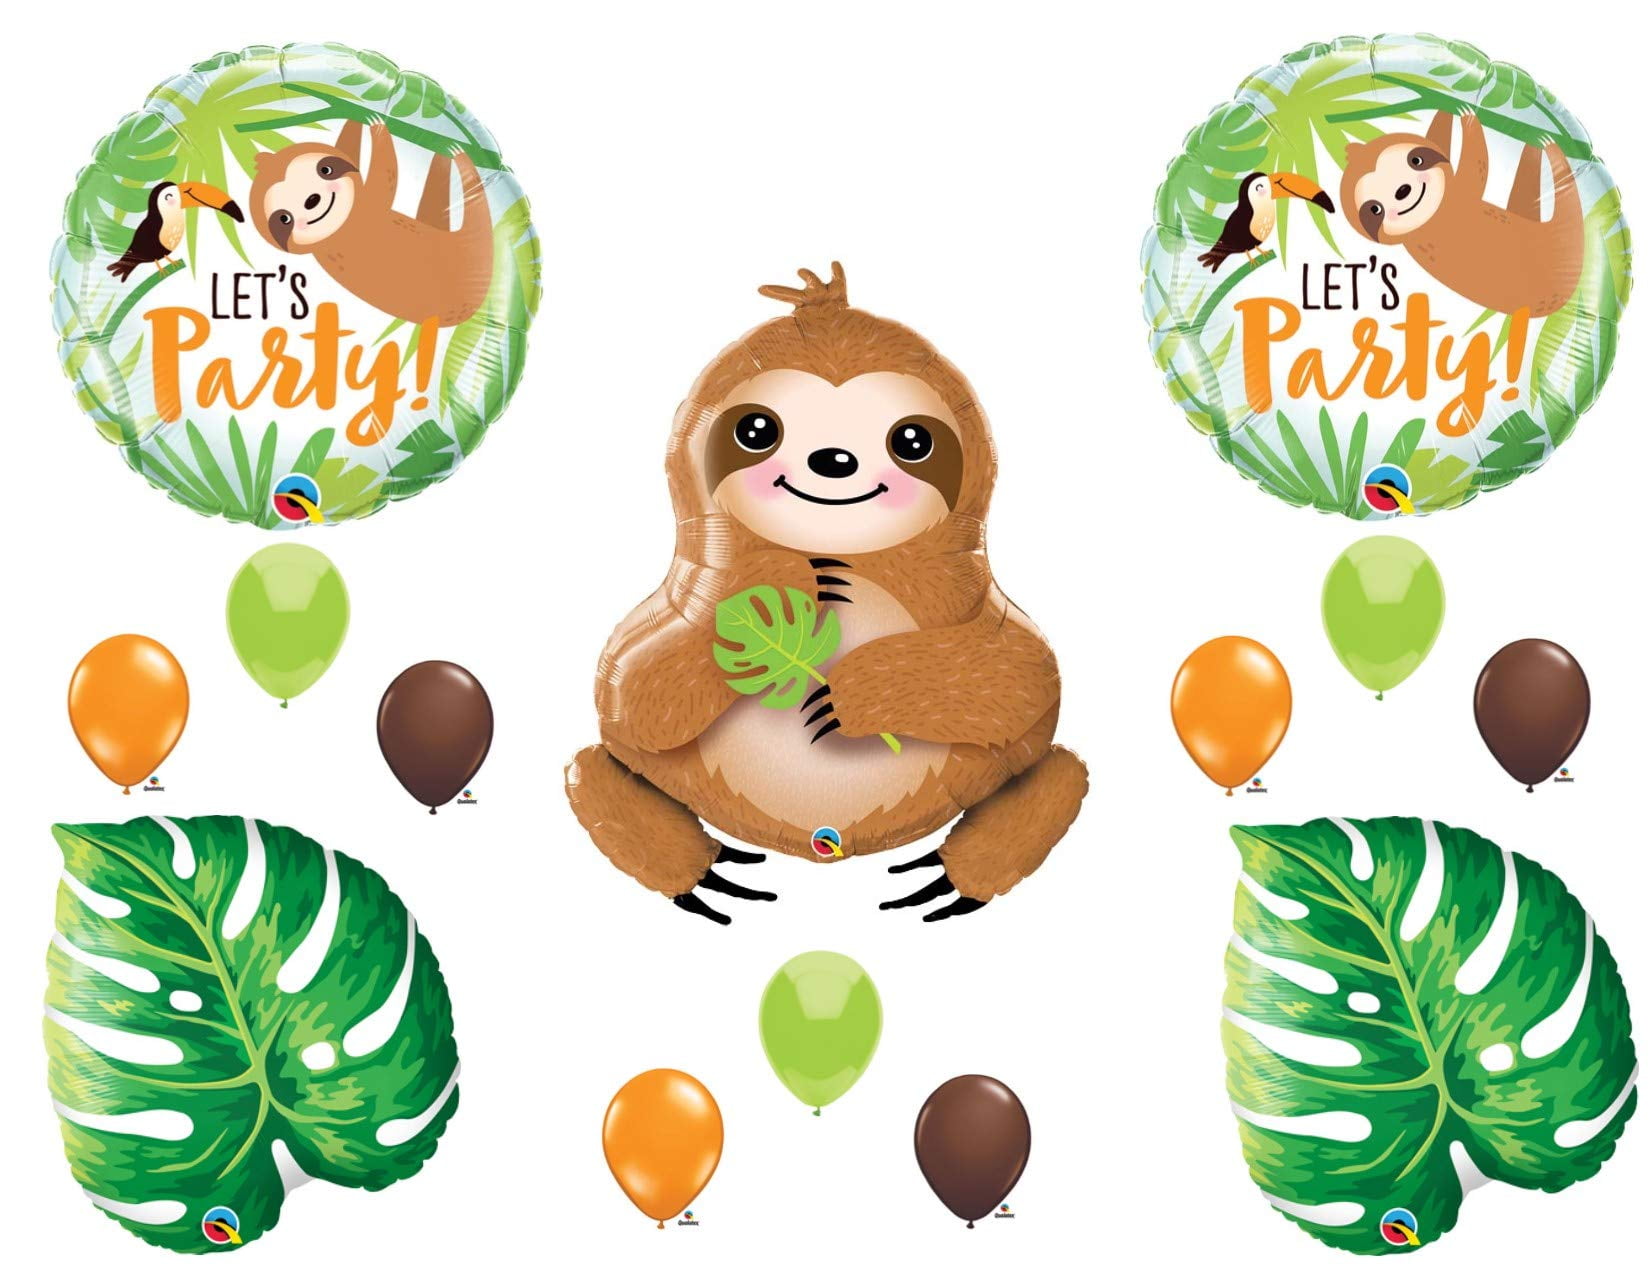 Sloth Let's Party Birthday Balloons Zoo Jungle Safari Monkey Decorations 